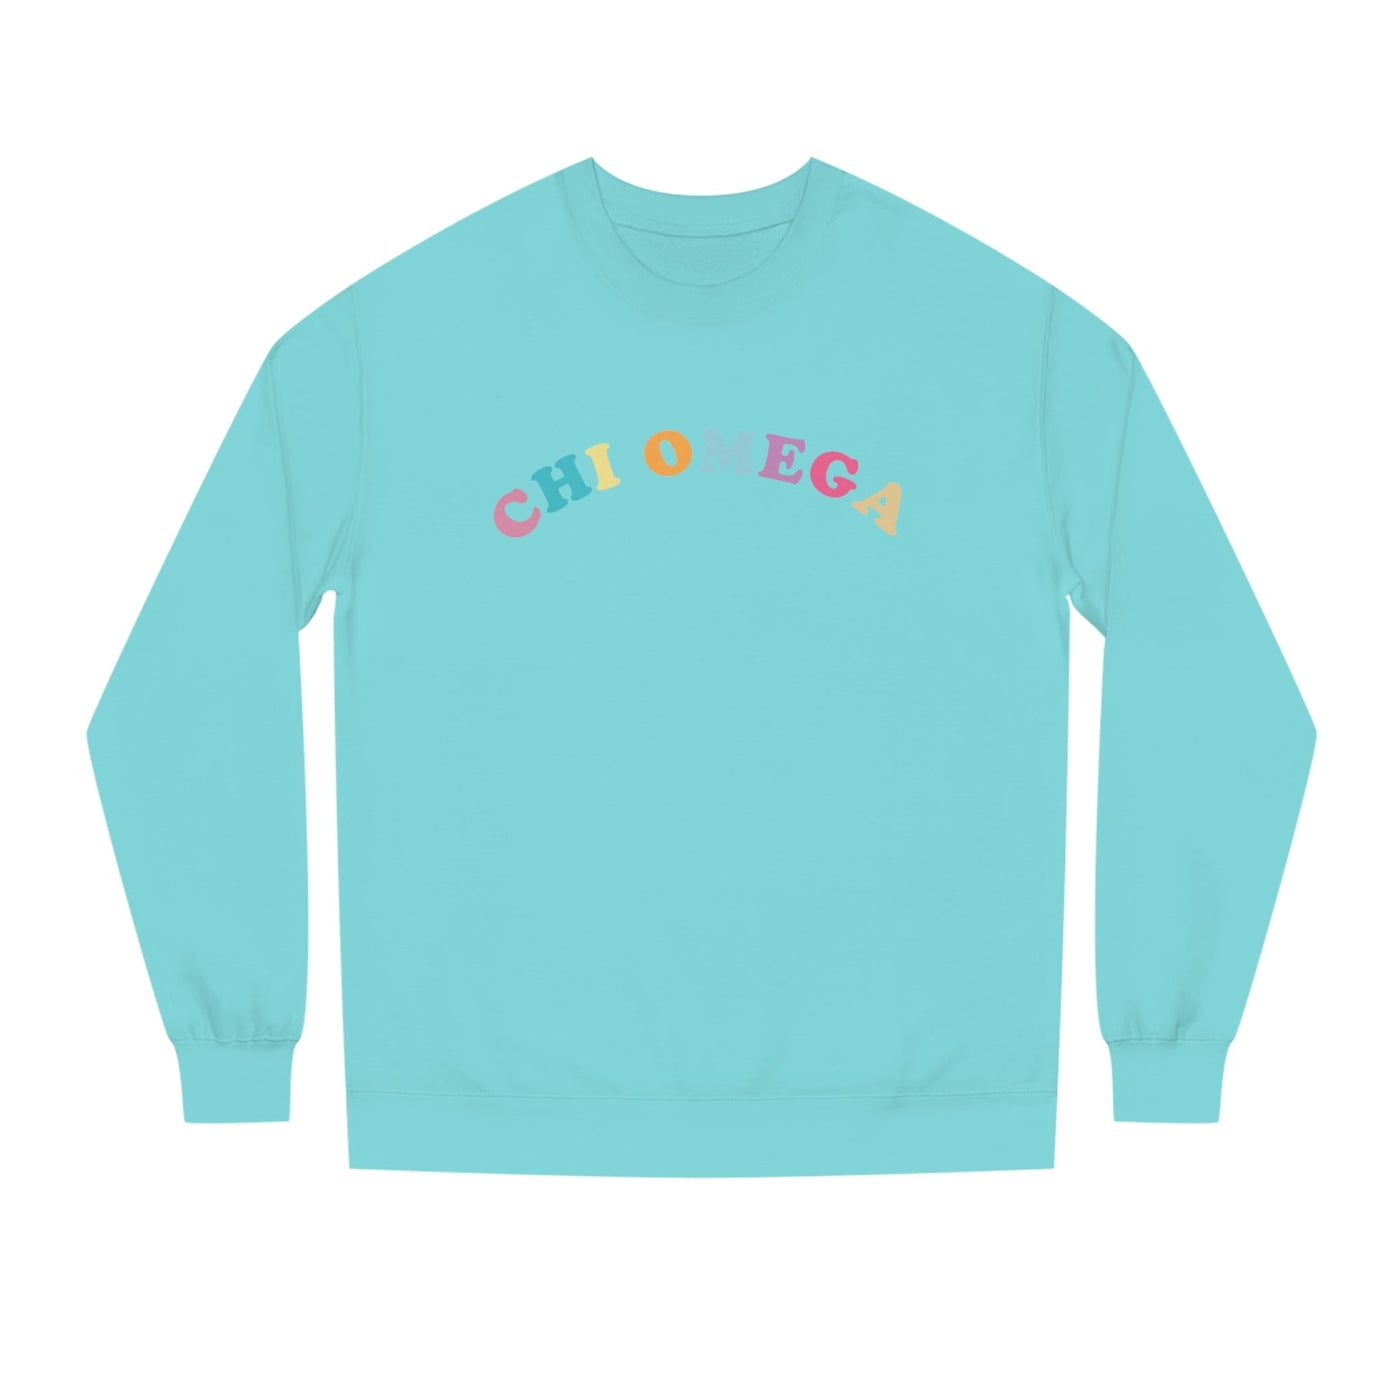 Chi Omega Colorful Text Cute Sorority Crewneck Sweatshirt